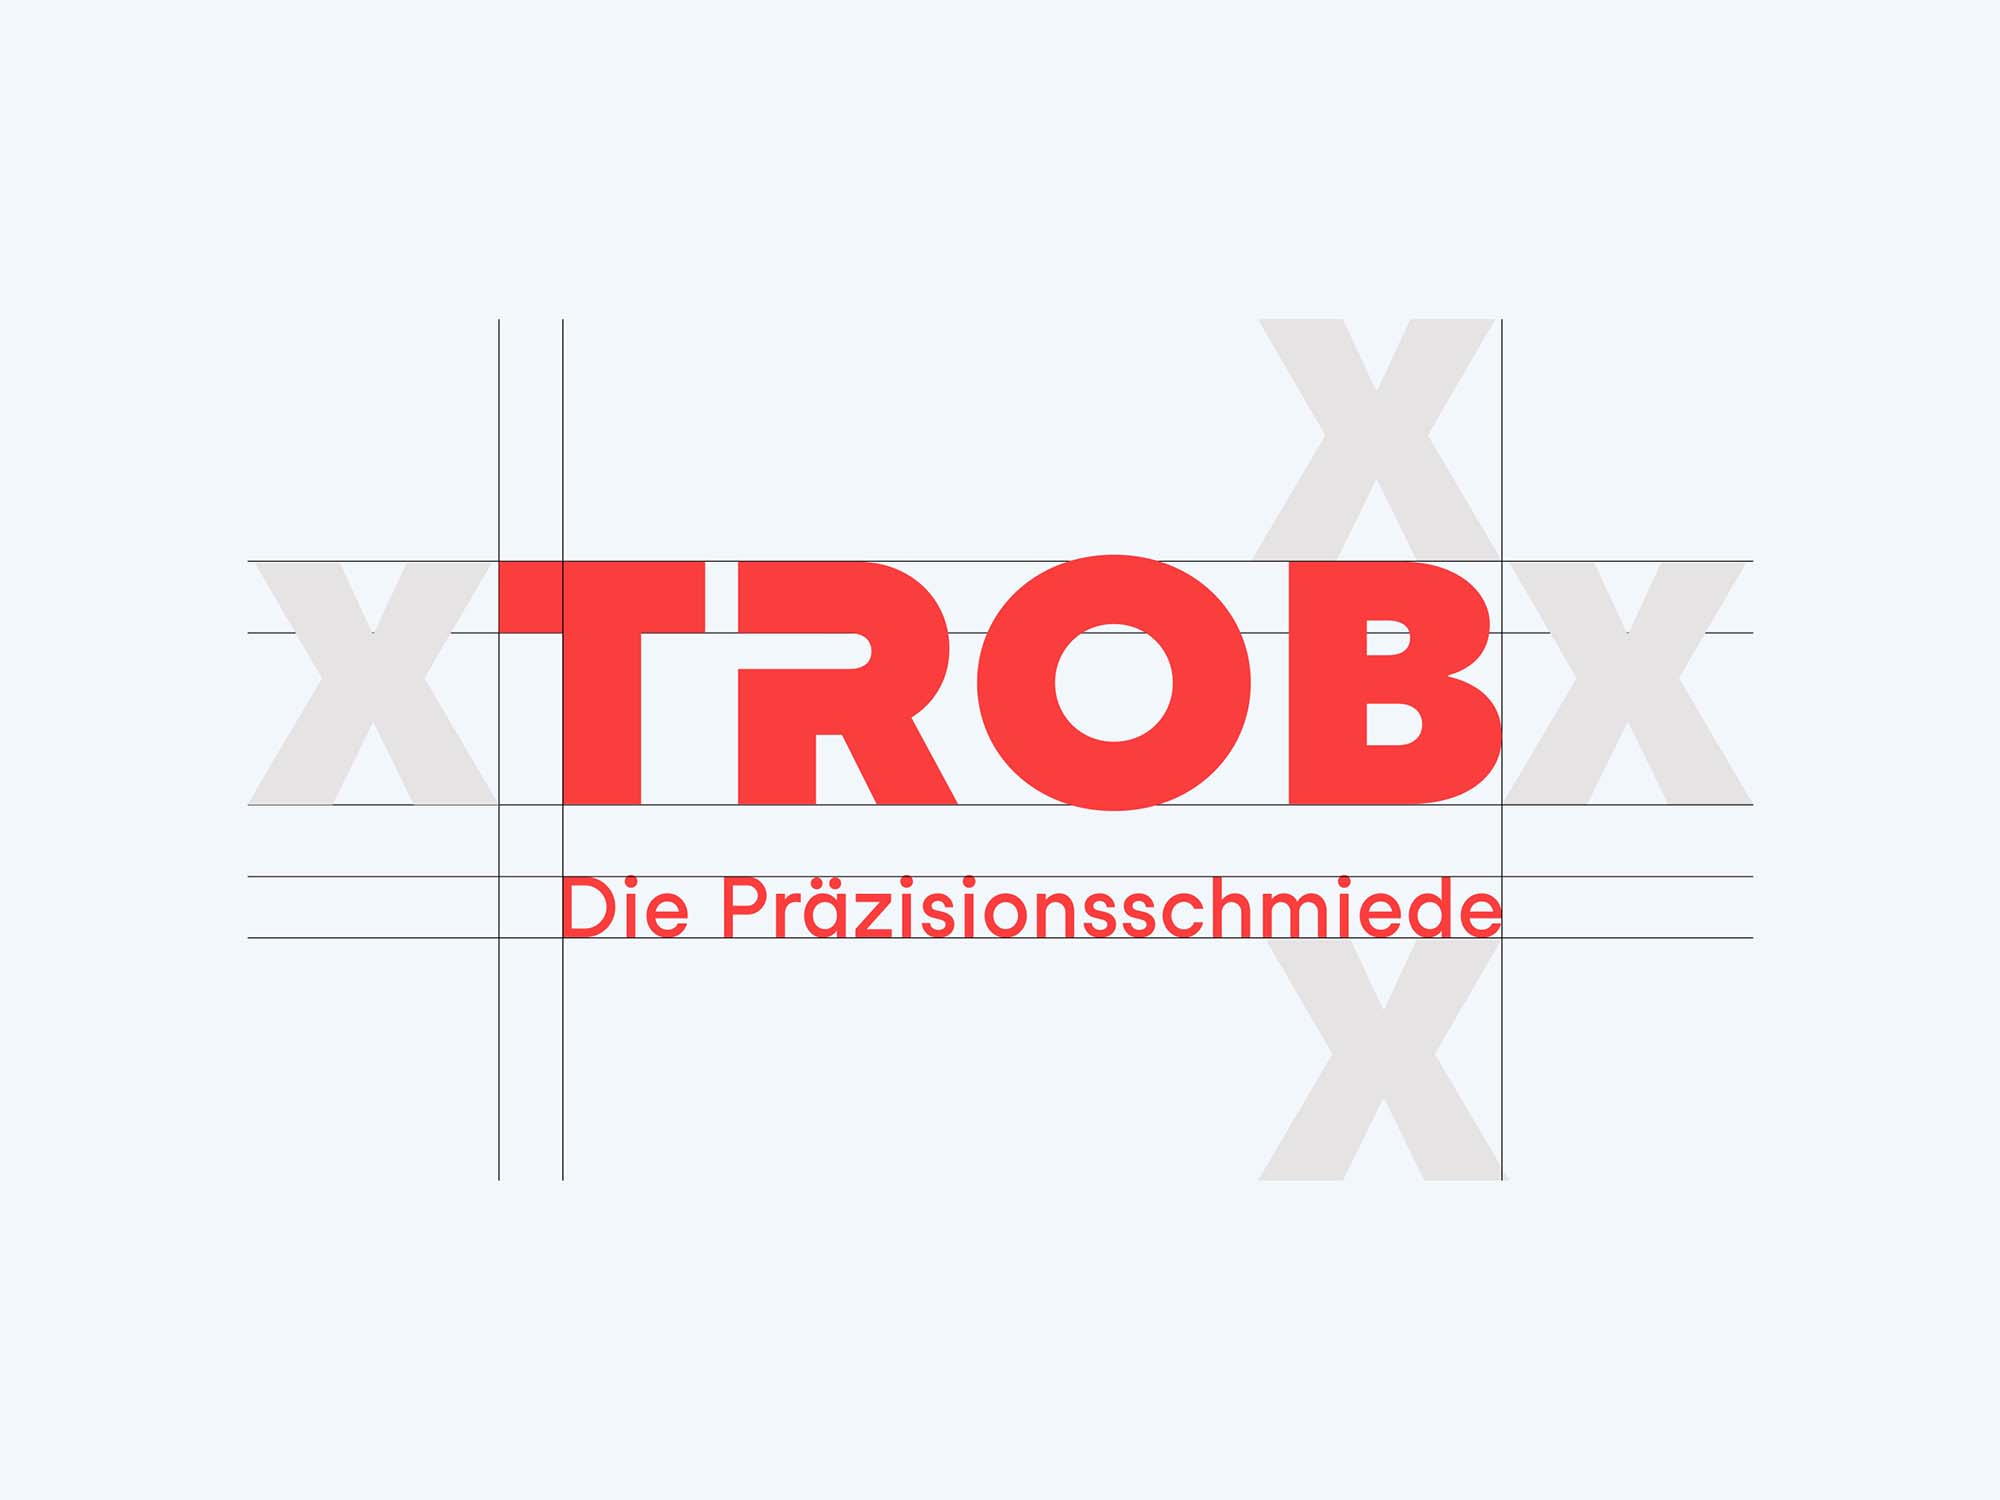 Logo design of the Trob brand